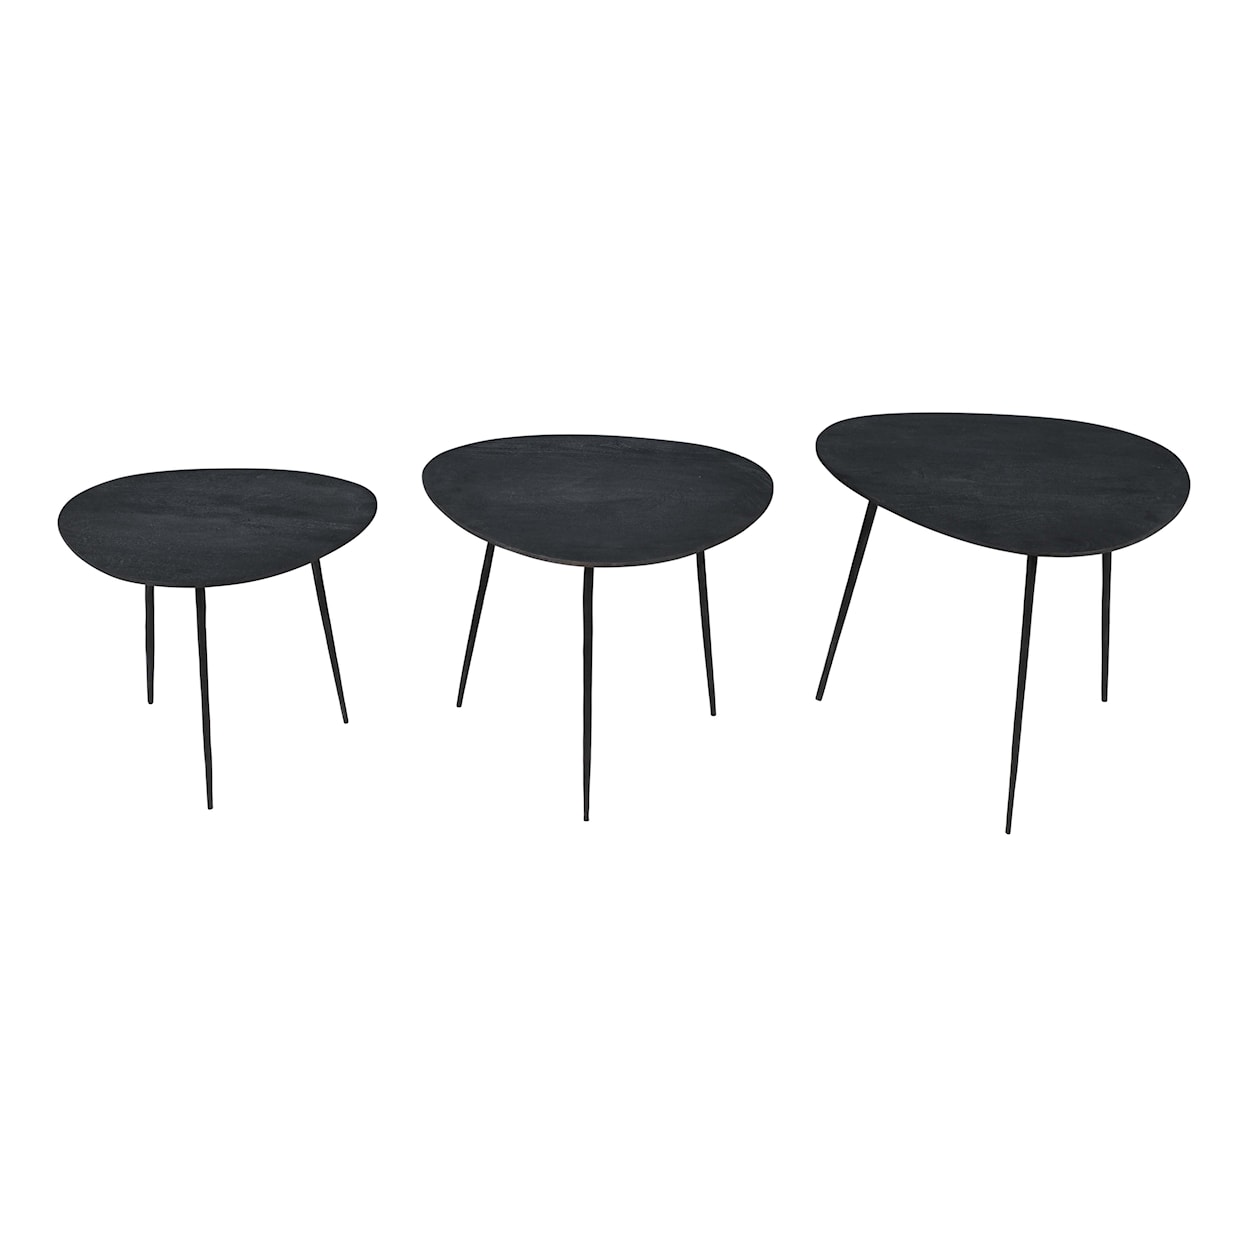 VFM Signature Reeves Nesting Table - Set of 3 - Black